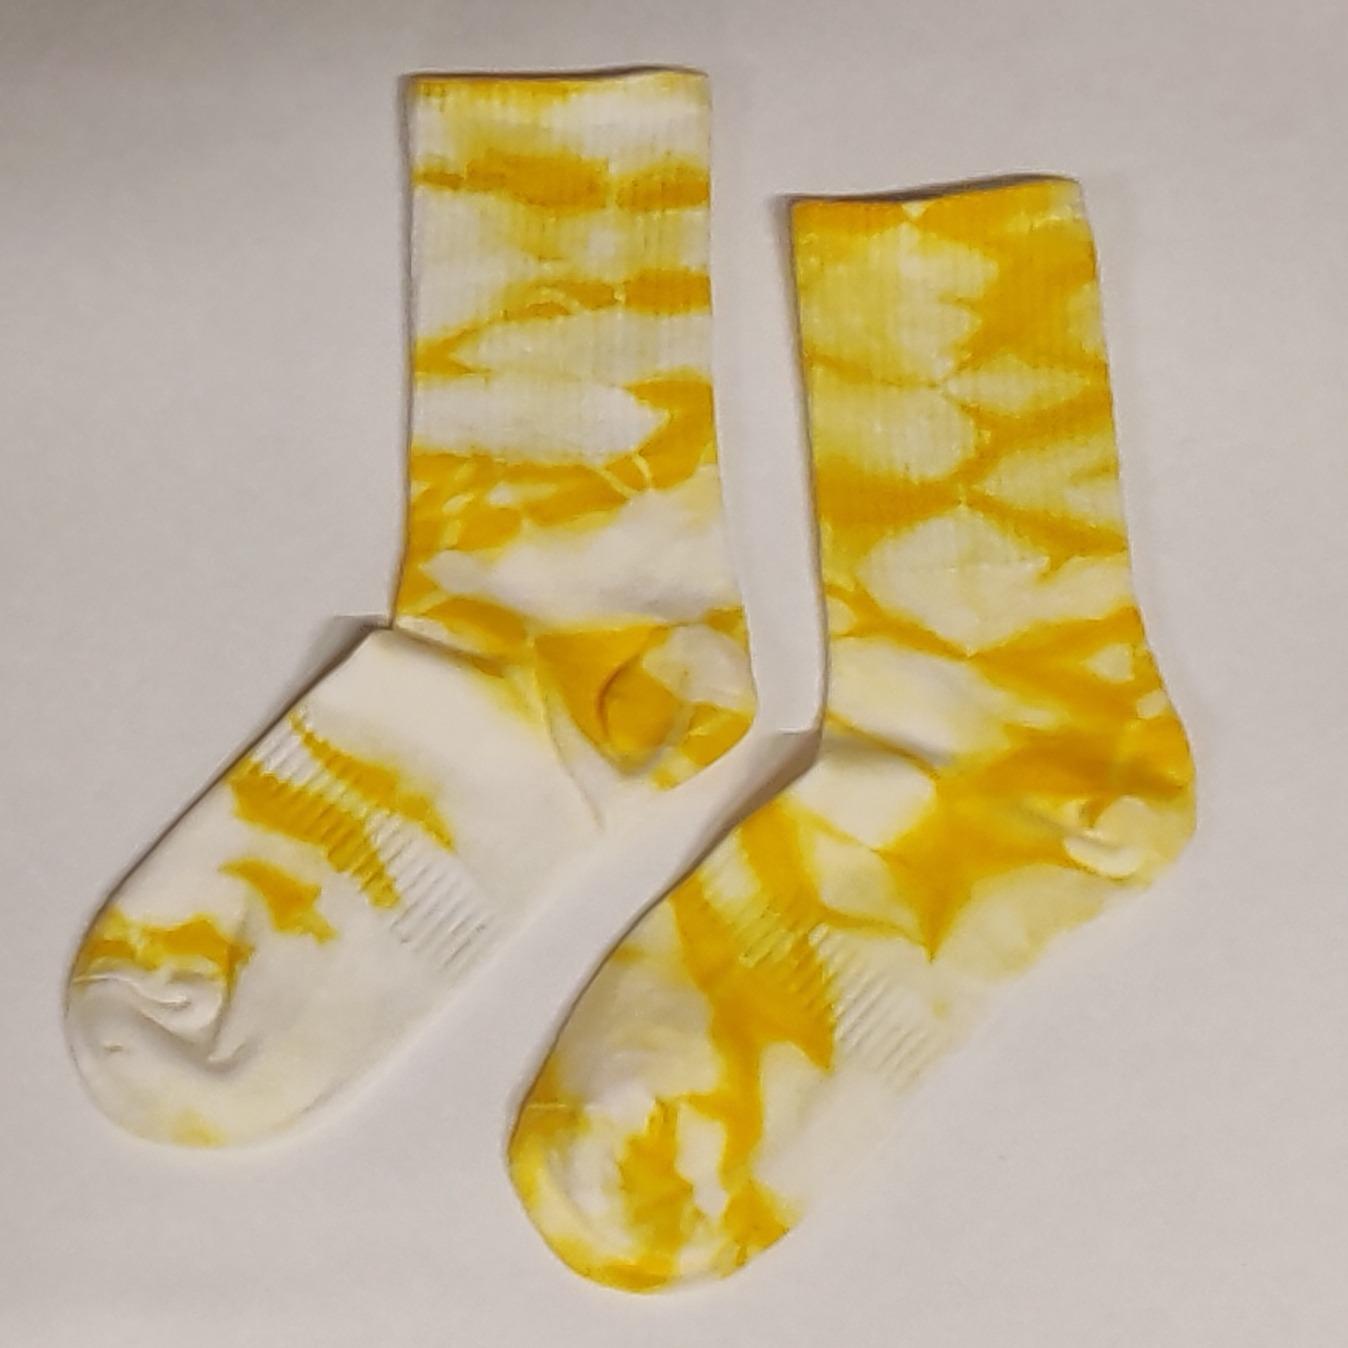 Unisex Yellow Tye Dye Breathable Gym Socks. Fits sizes UK4 - UK10 Cotton / Nylon / Spandex